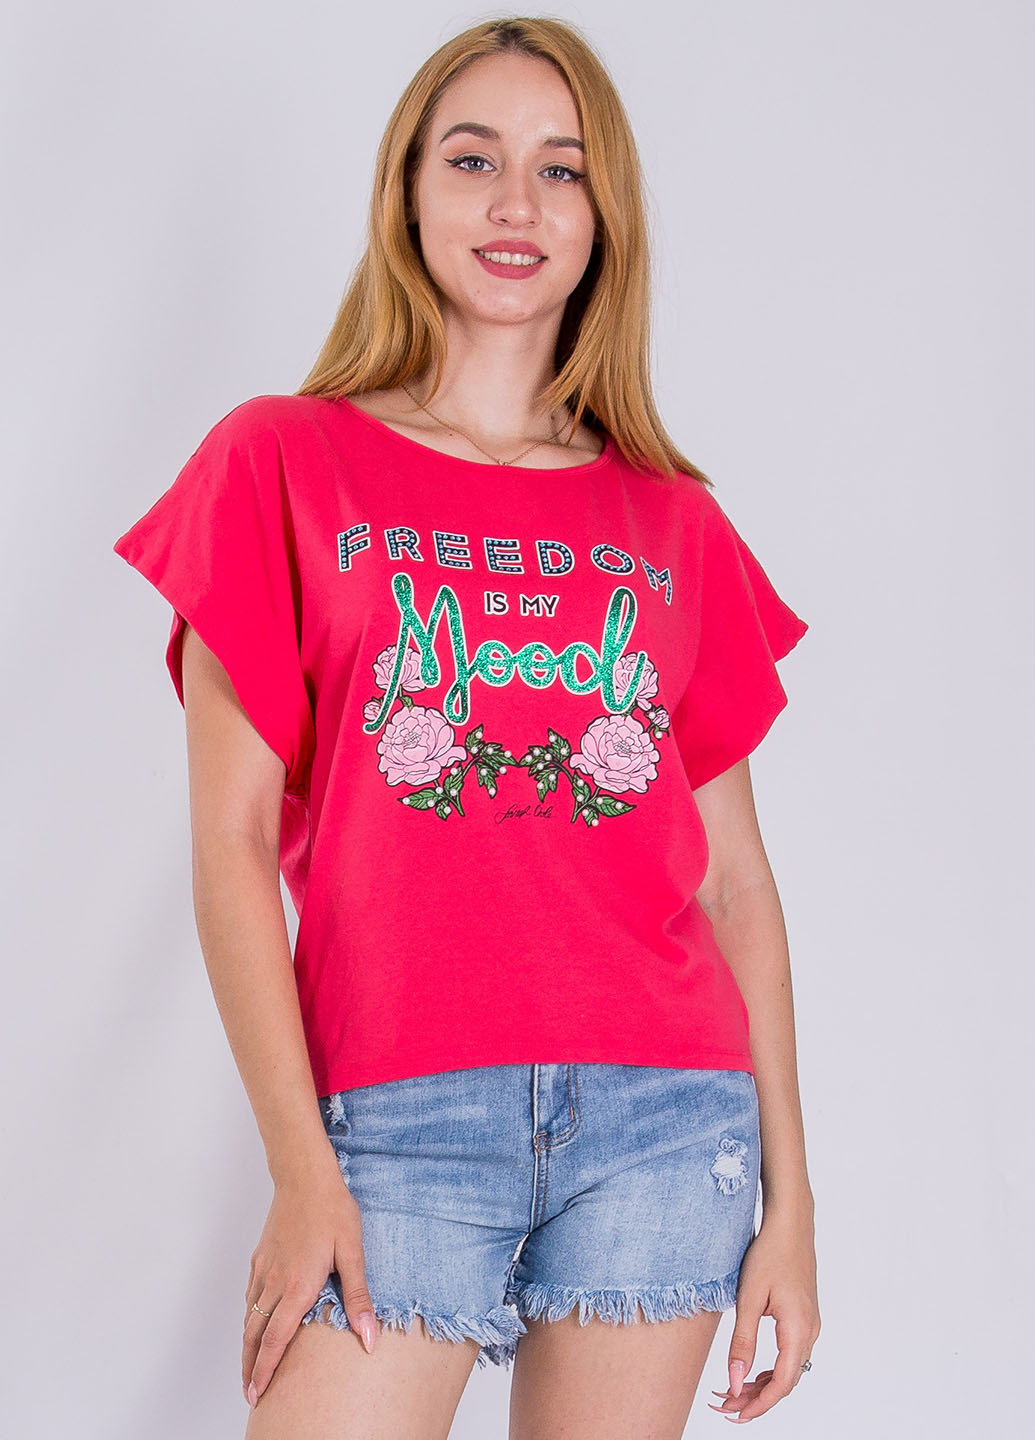 Розовая летняя футболка Sarah Chole